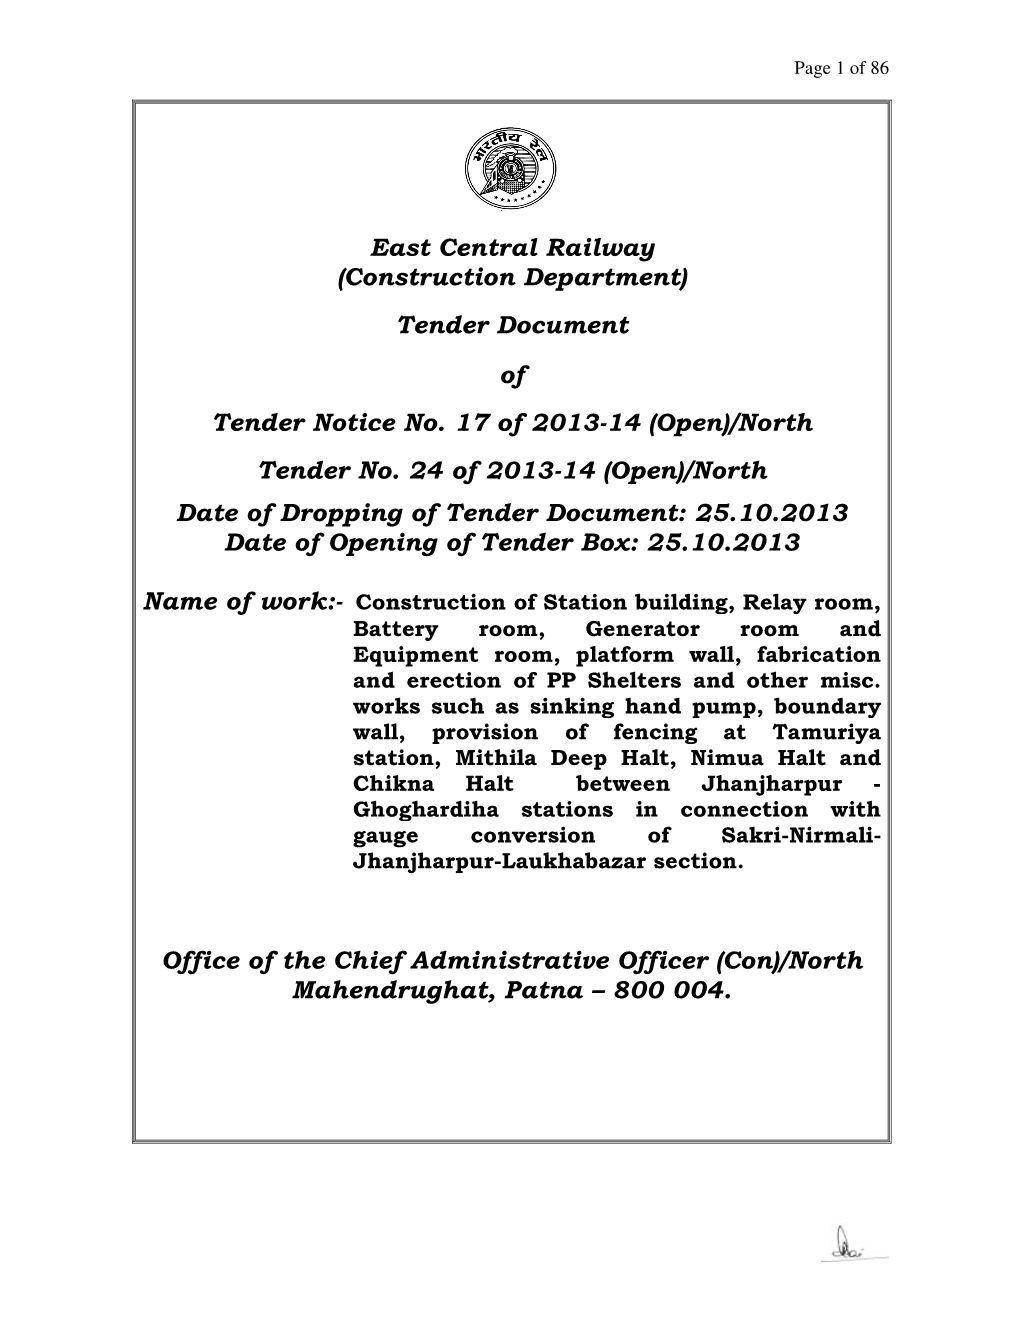 Tender Document of Tender Notice No. 17 of 2013-14